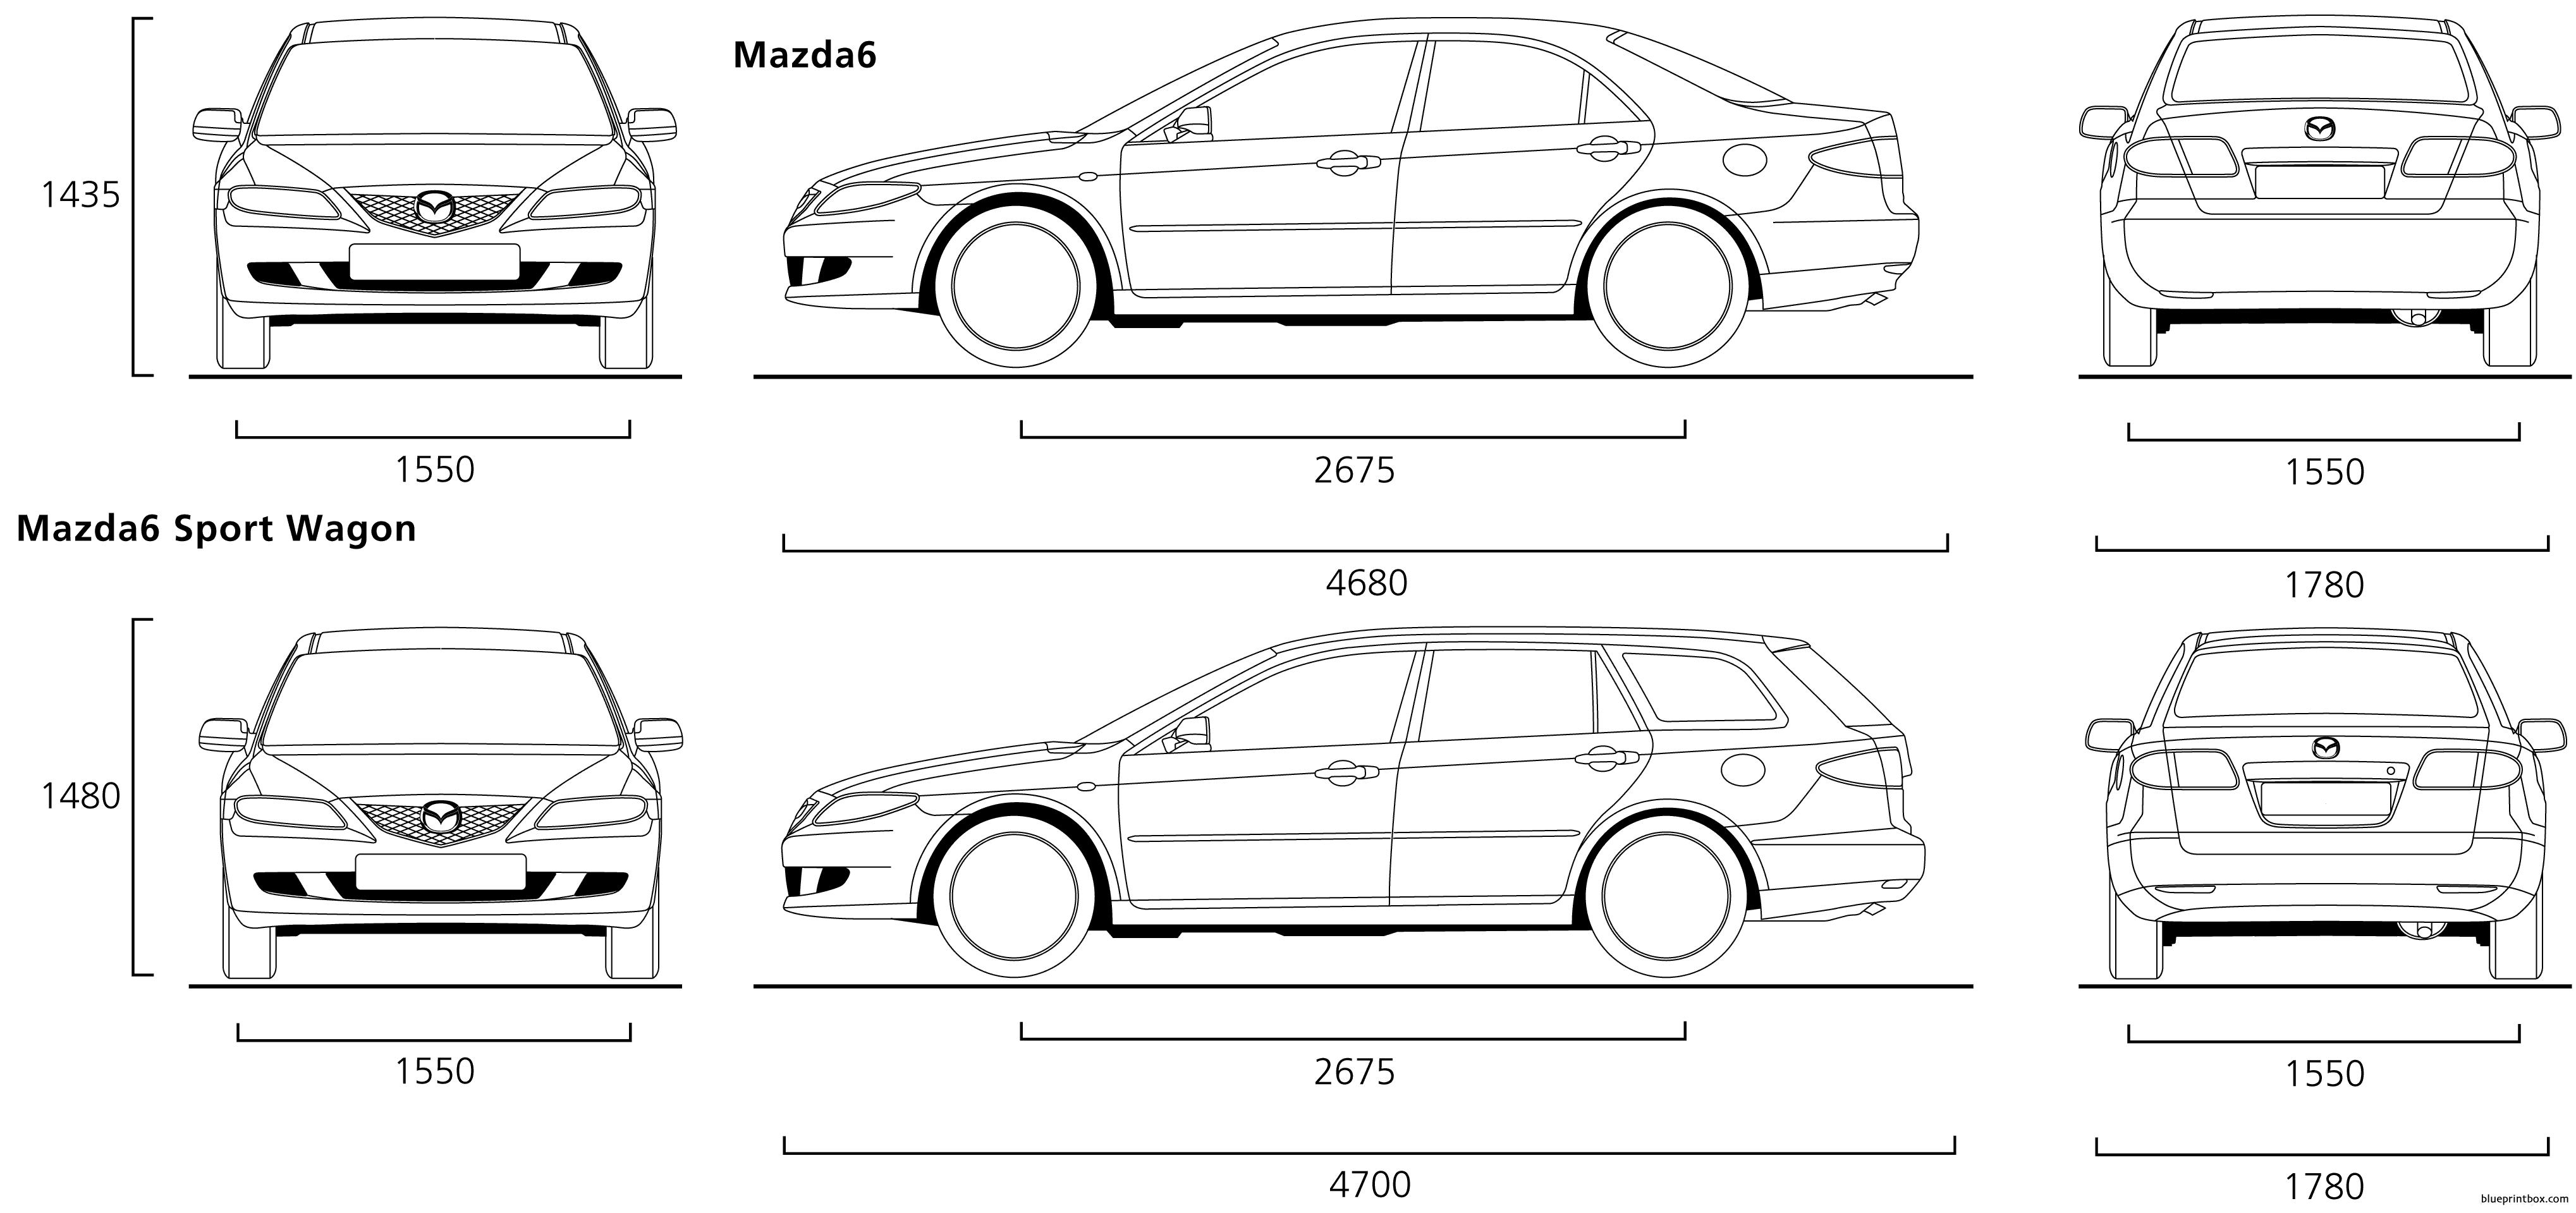 mazda 6 3 - BlueprintBox.com - Free Plans and Blueprints of Cars